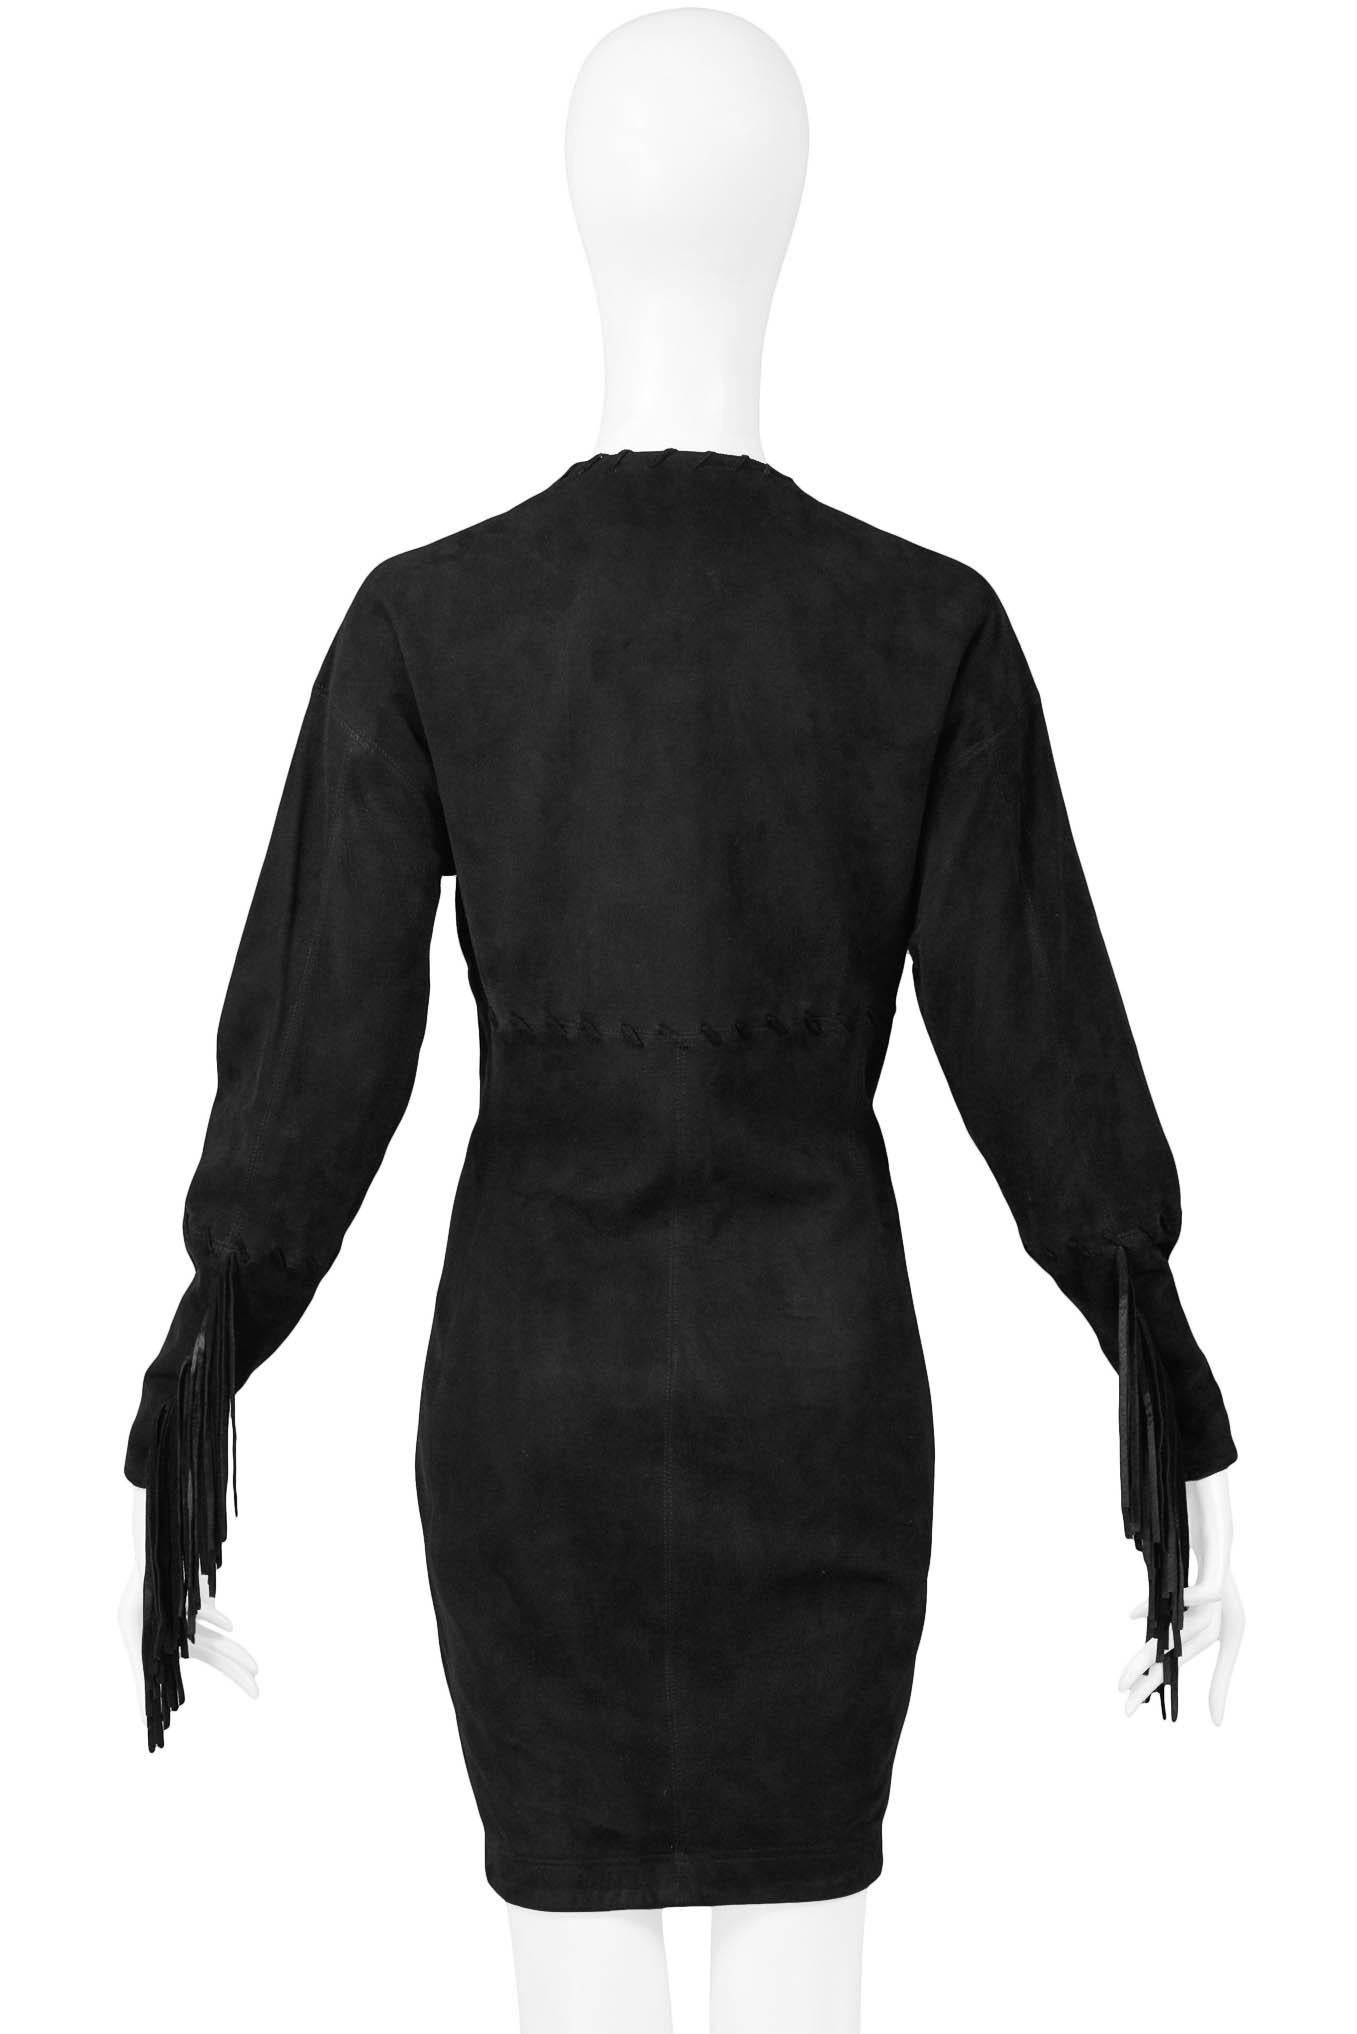 Women's Issac Mizrahi Black Leather Suede Dress 1989 For Sale